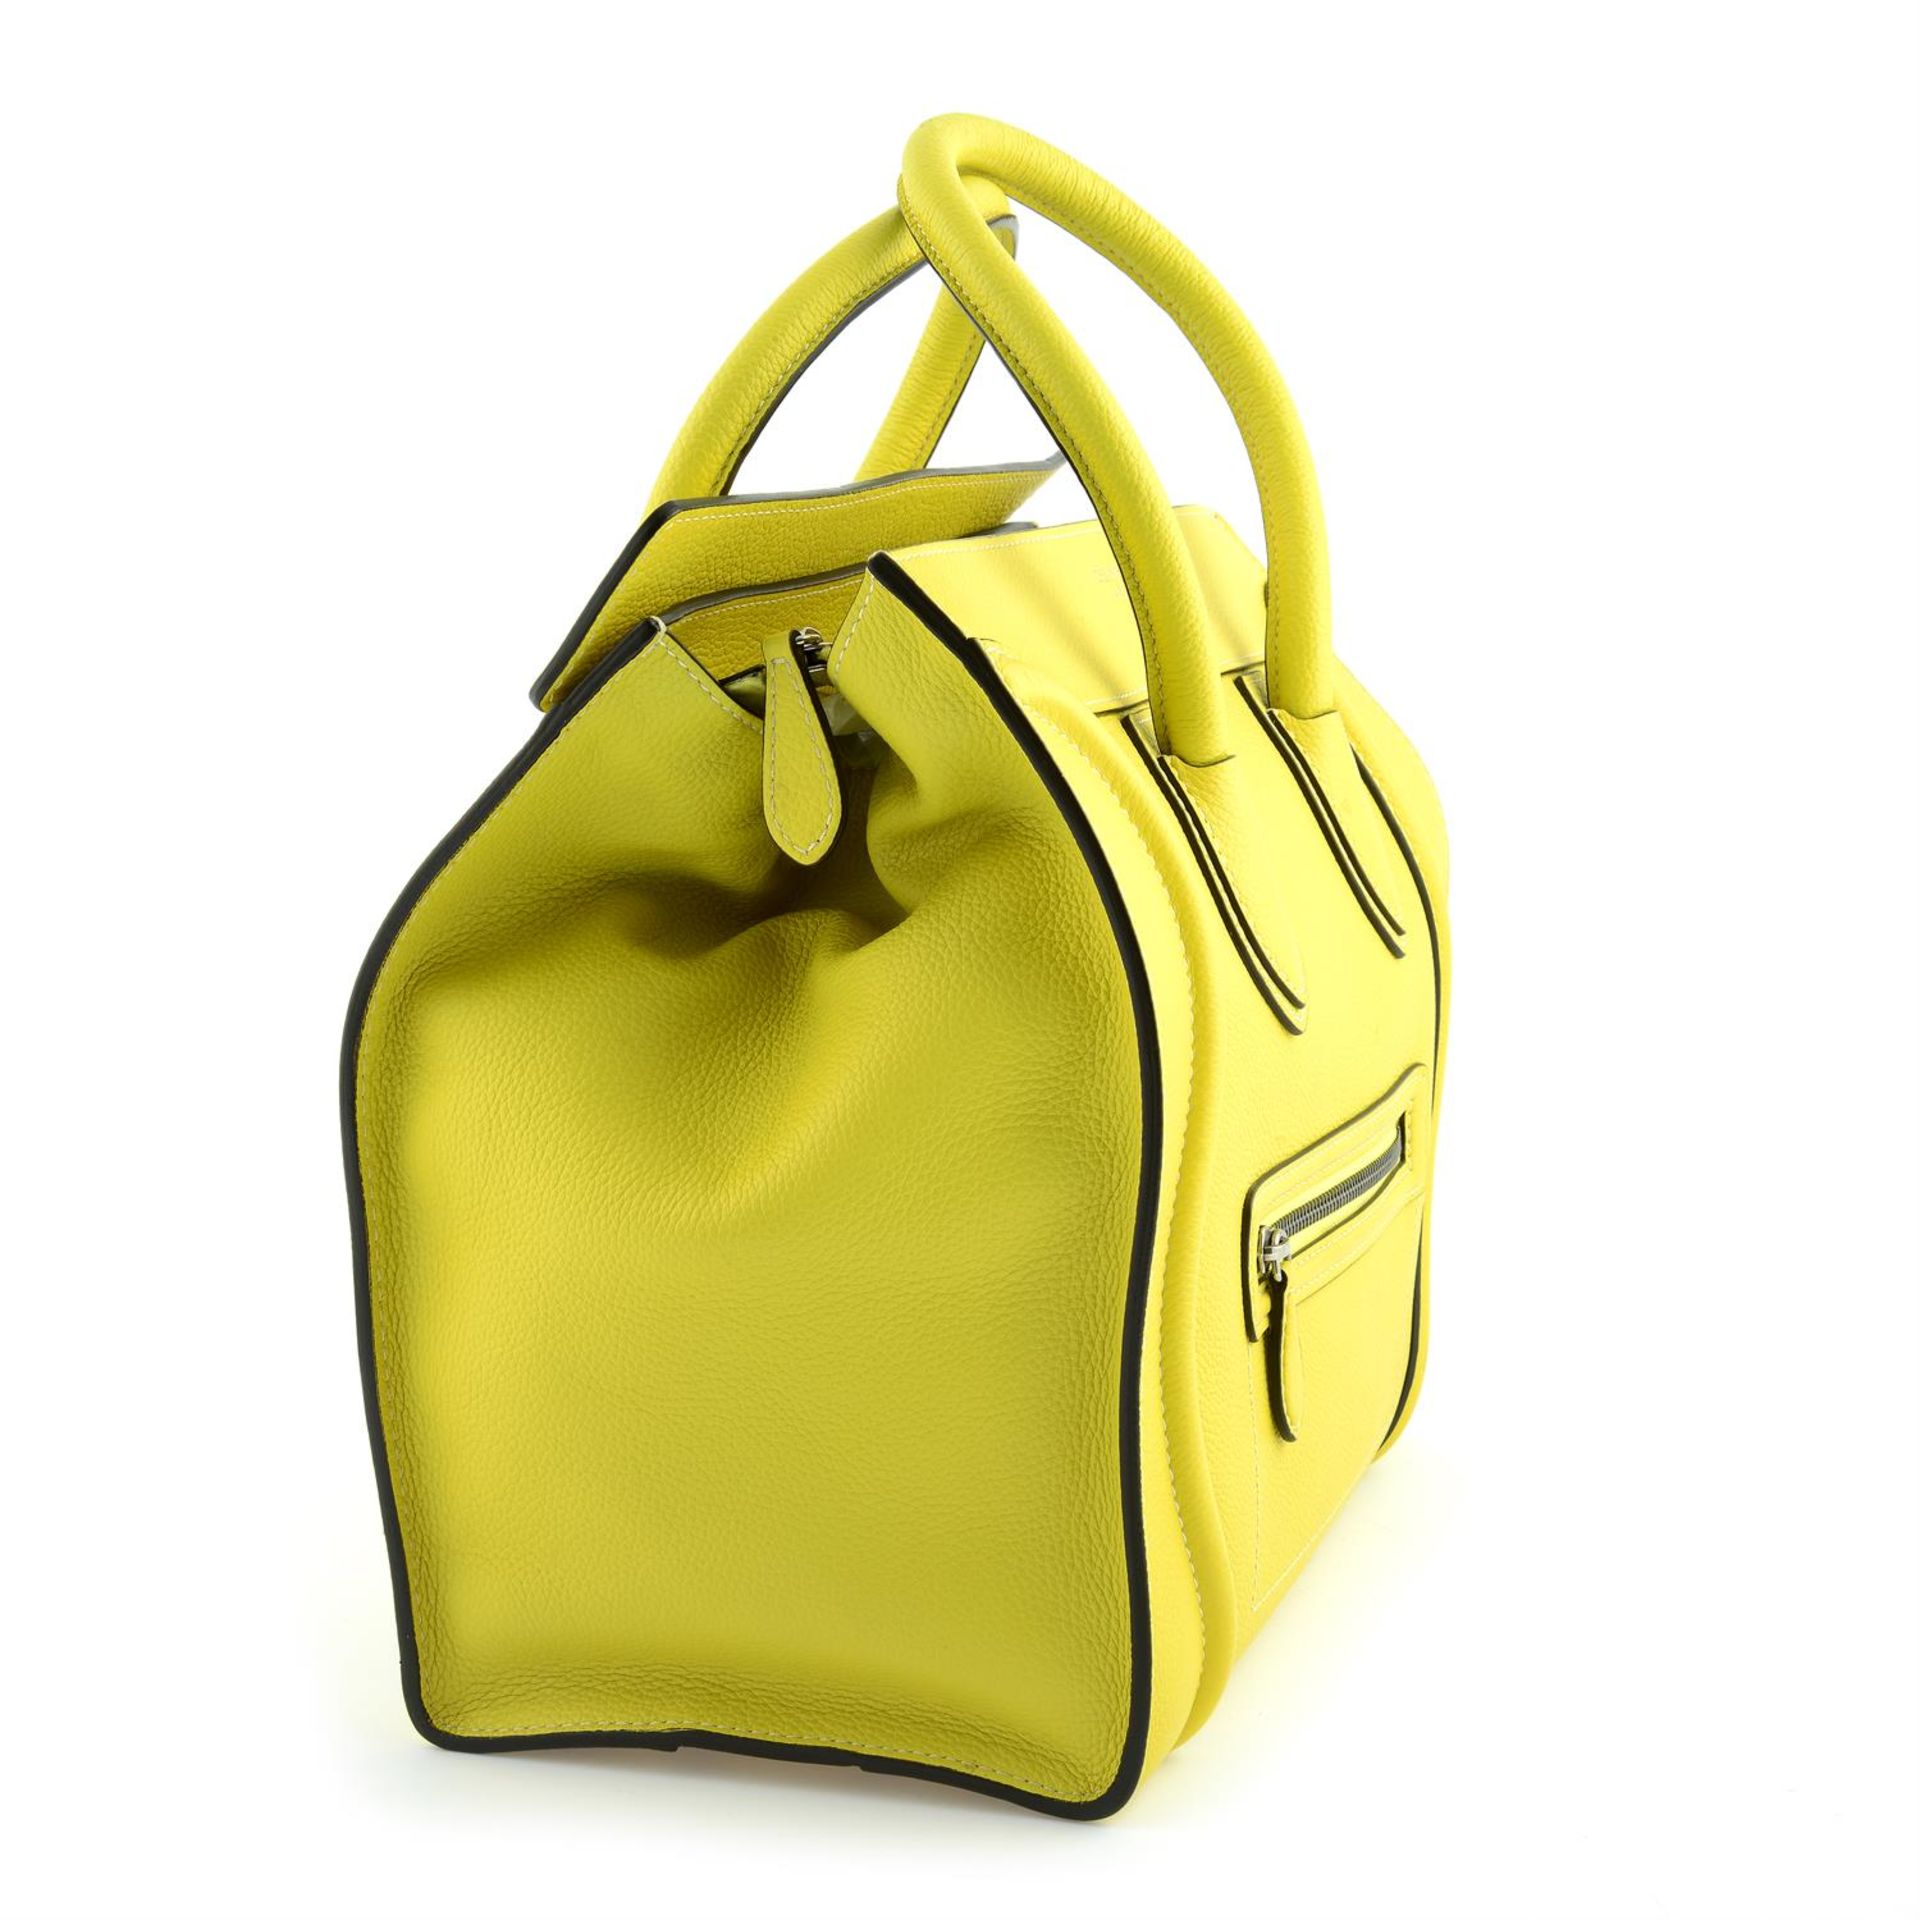 CÉLINE- a mustard yellow leather Phantom bag. - Image 4 of 5